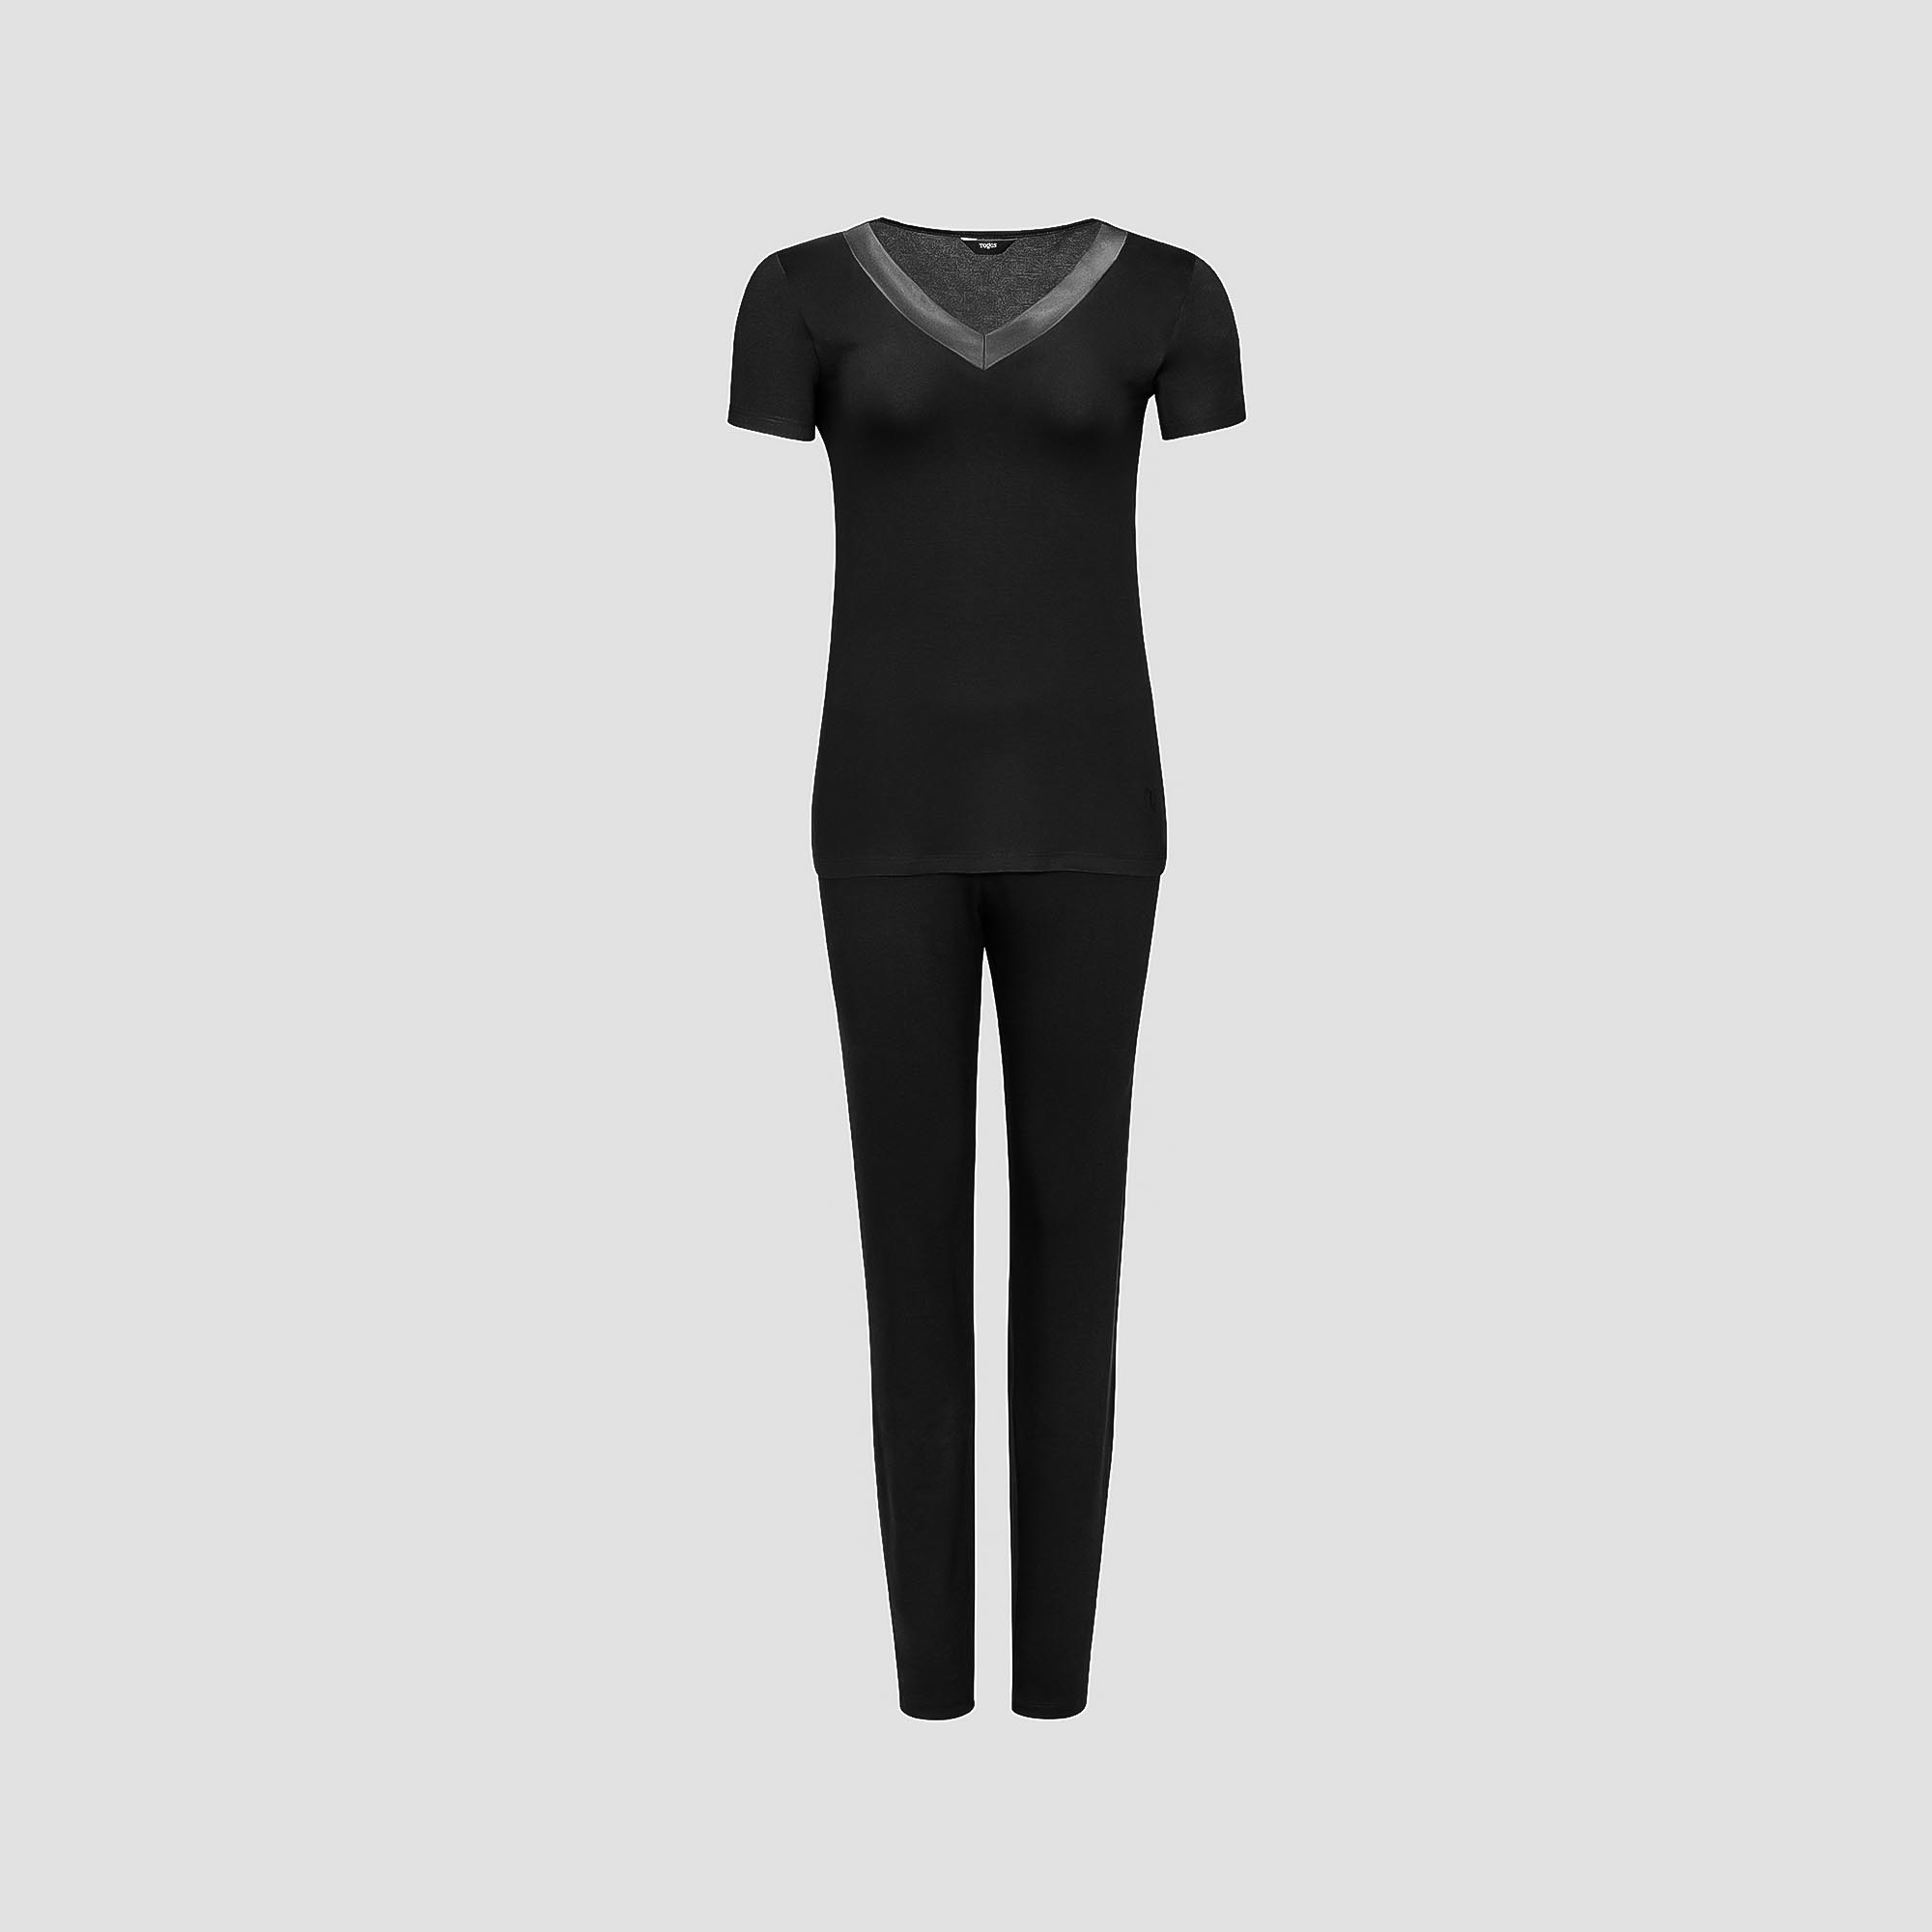 Пижама Togas Ингелла черная женская XXL(52) 2 предмета пижама футболка брюки